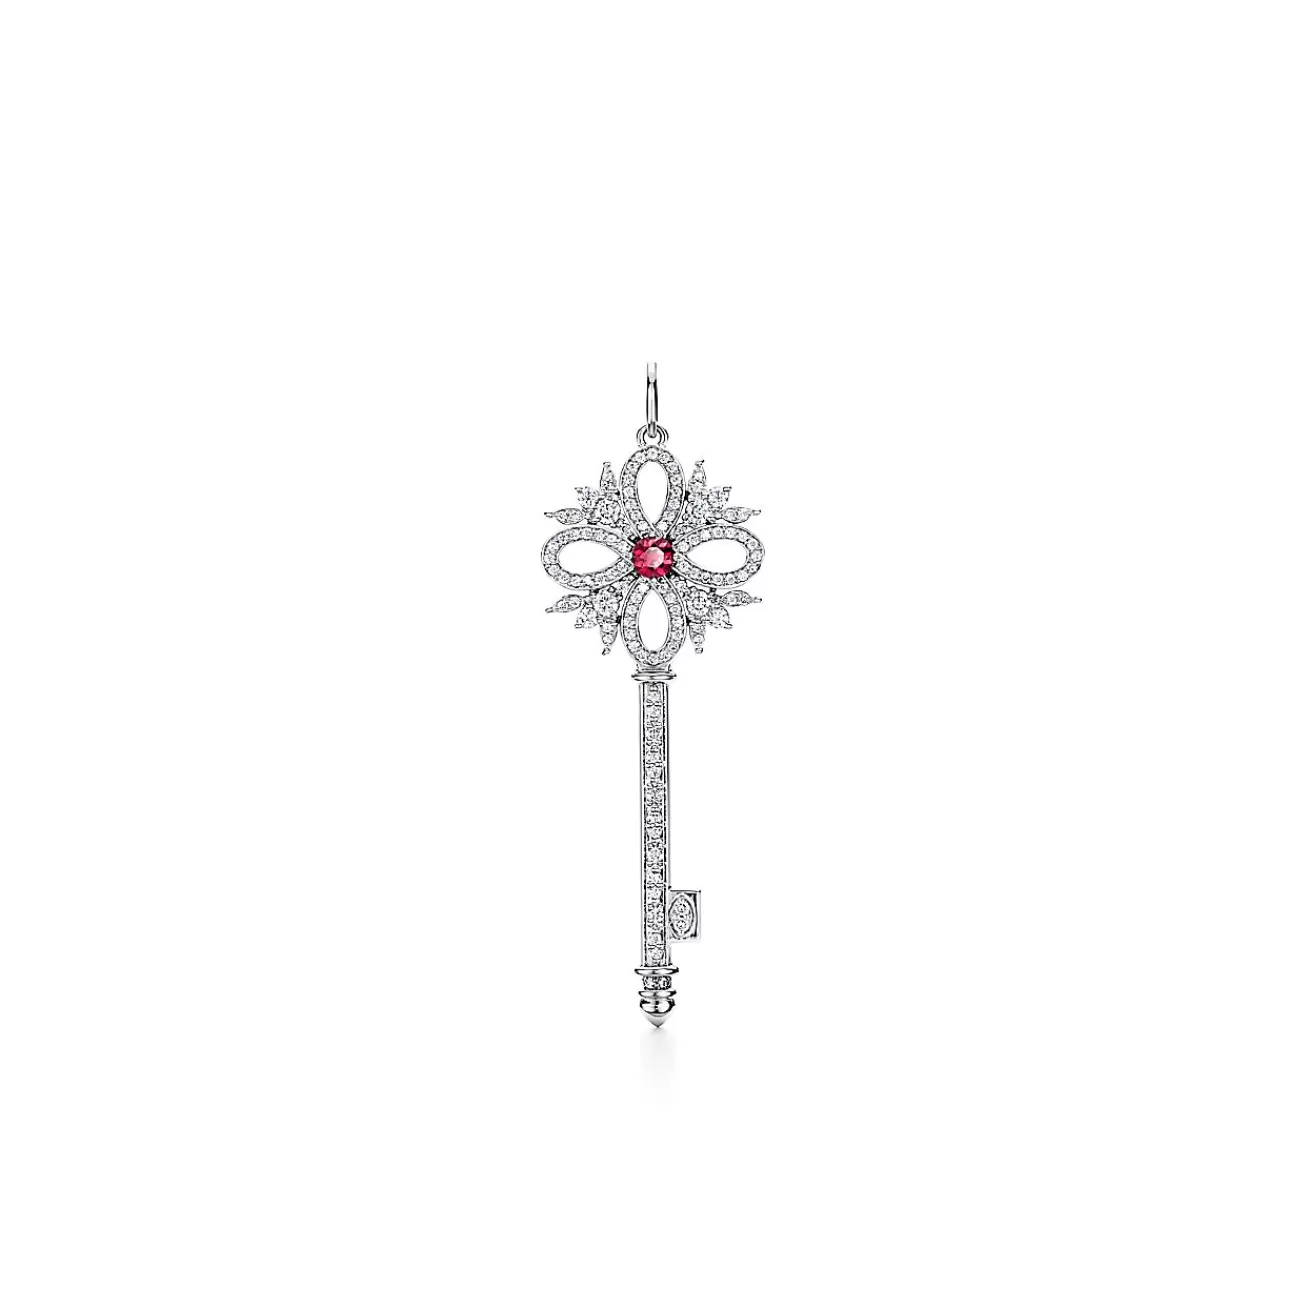 Tiffany & Co. Tiffany Keys Tiffany Victoria® key pendant in platinum with gemstones, medium. | ^ Platinum Jewelry | Tiffany Victoria®